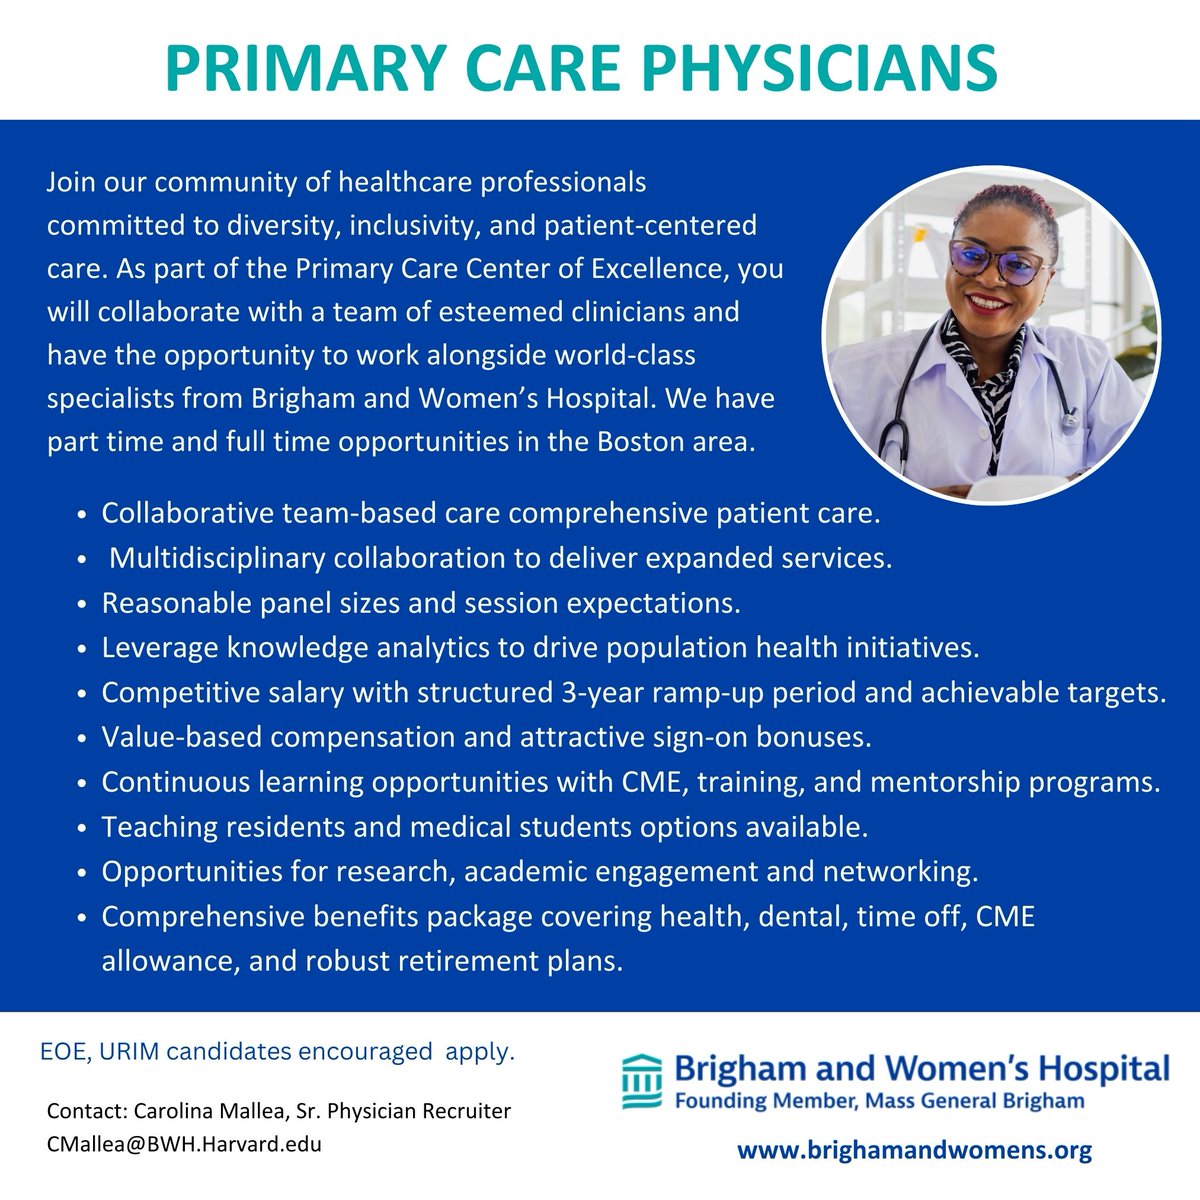 Primary Care Physician opportunities in the greater Boston area.  #InternalMedicine #FamilyMedicine #PrimaryCare #PhysicianJobs #Physicians